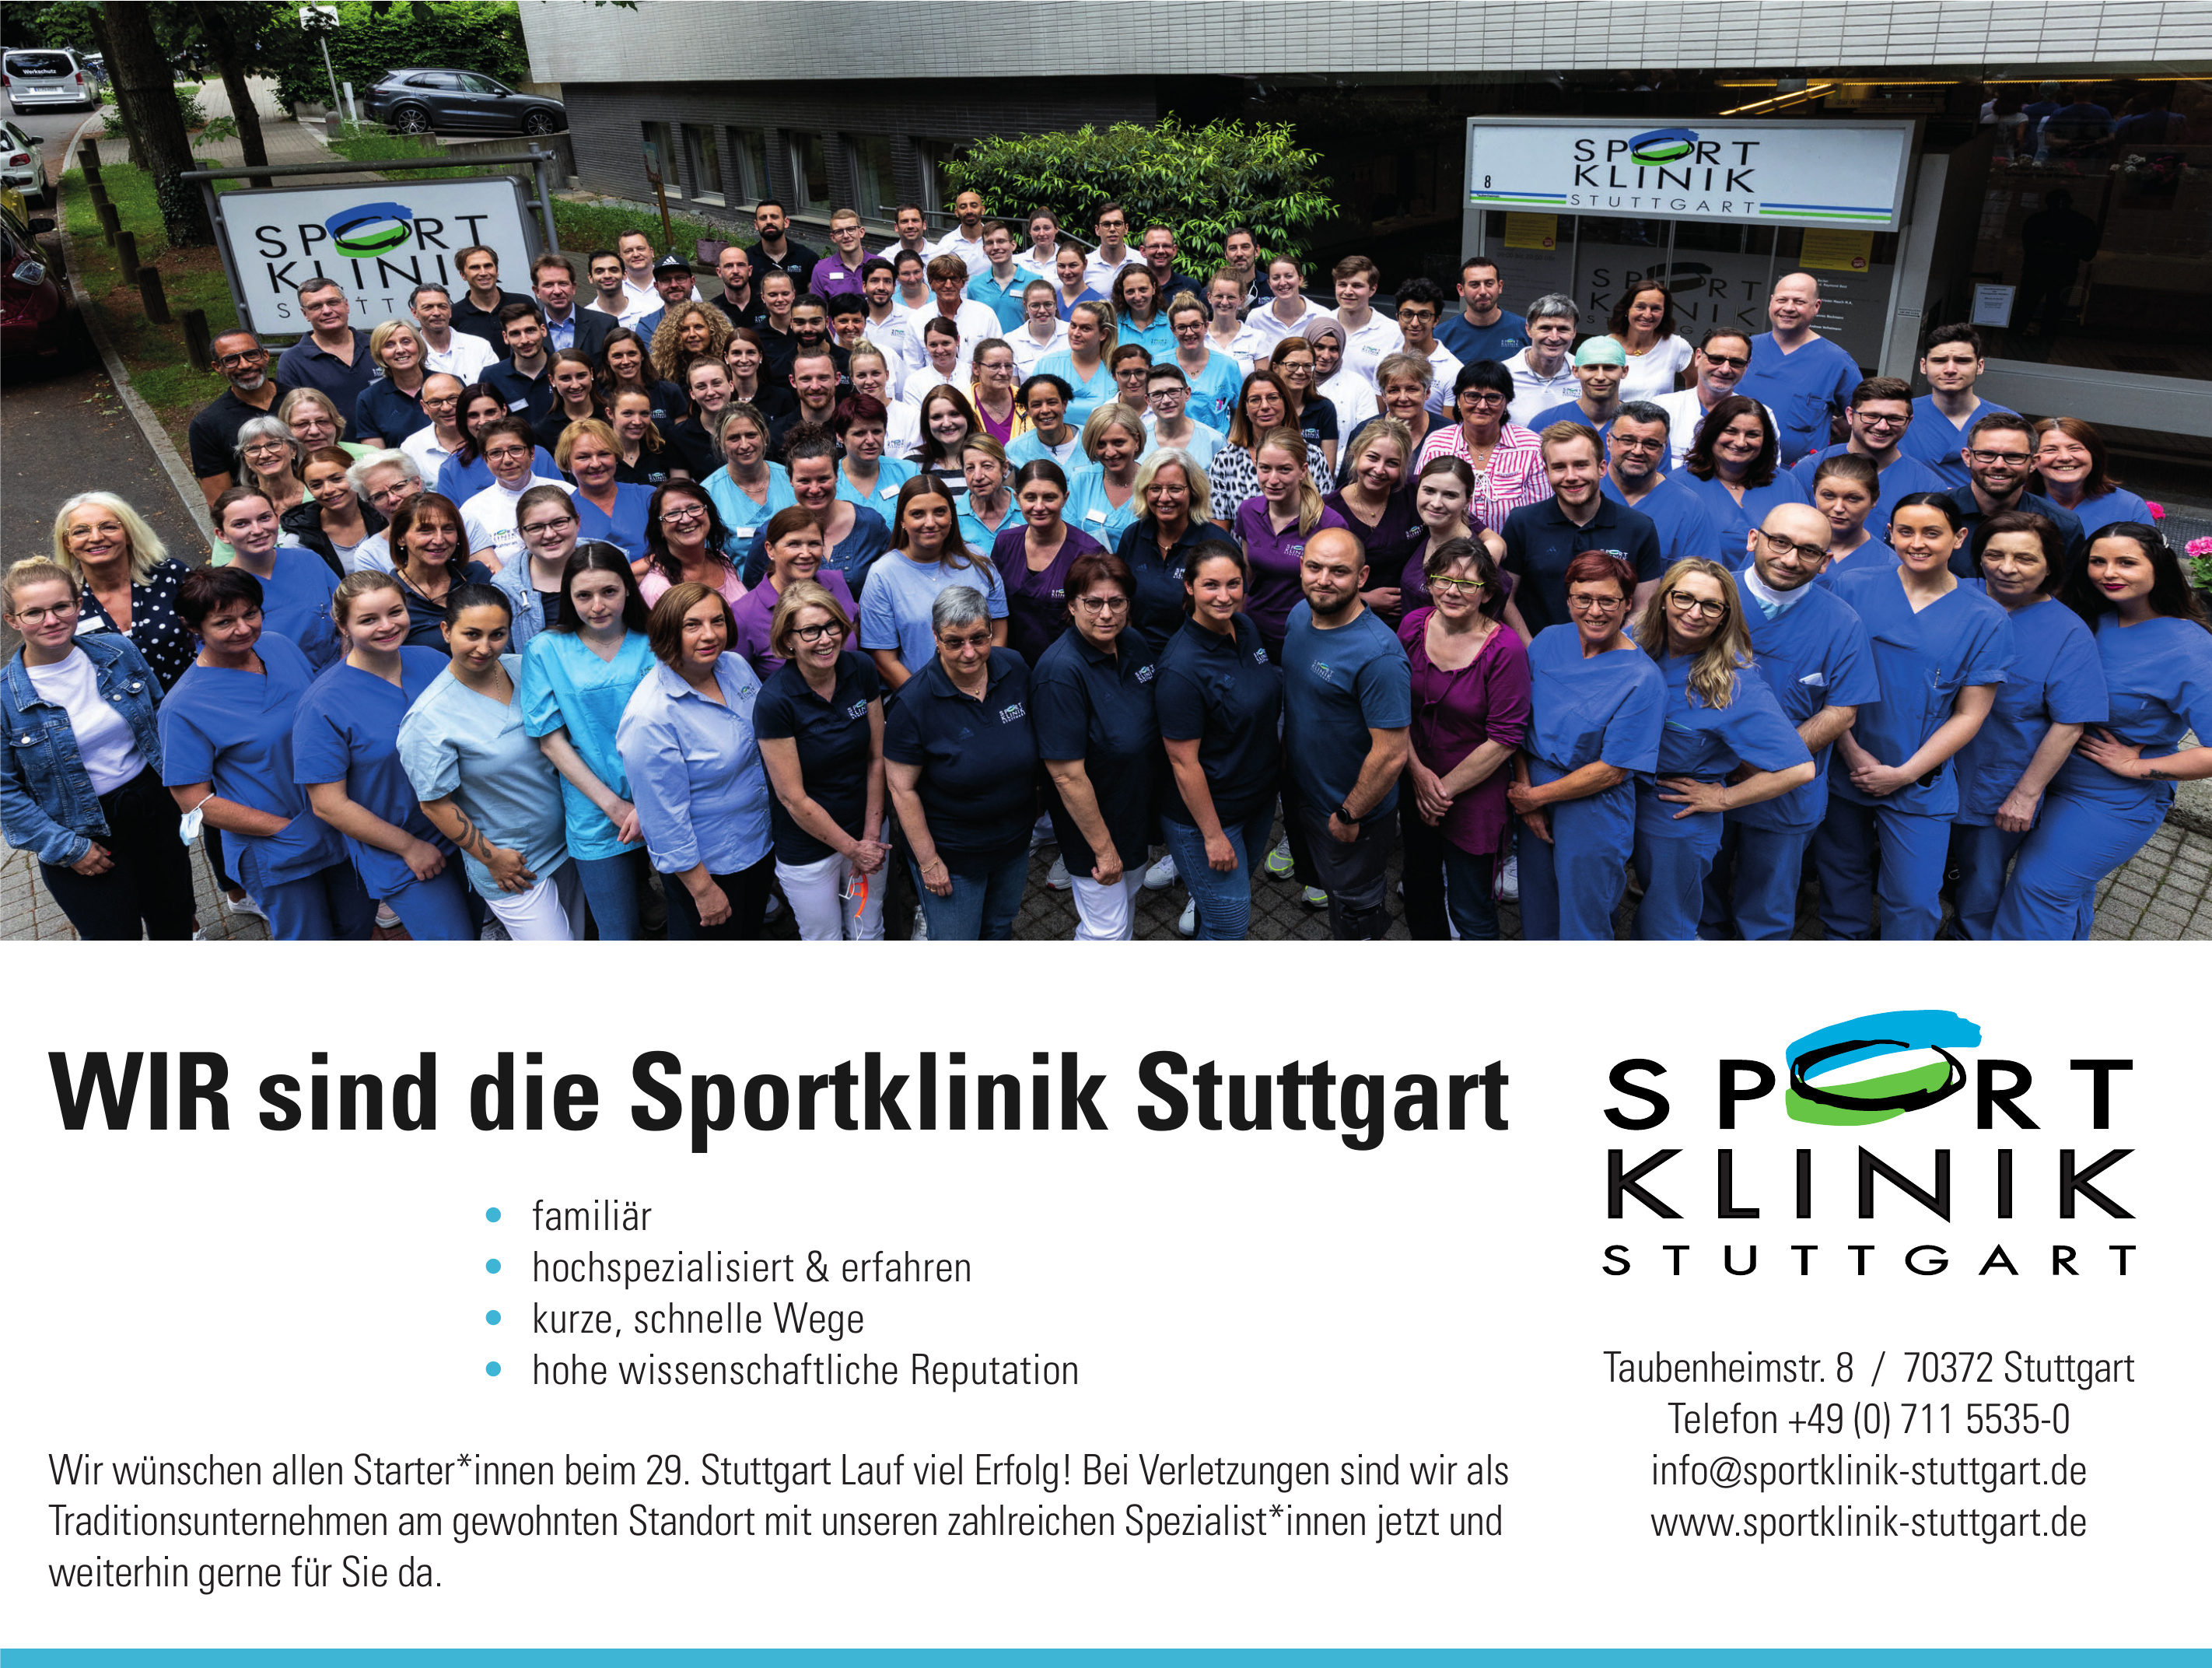 Sportklinik Stuttgart GmbH